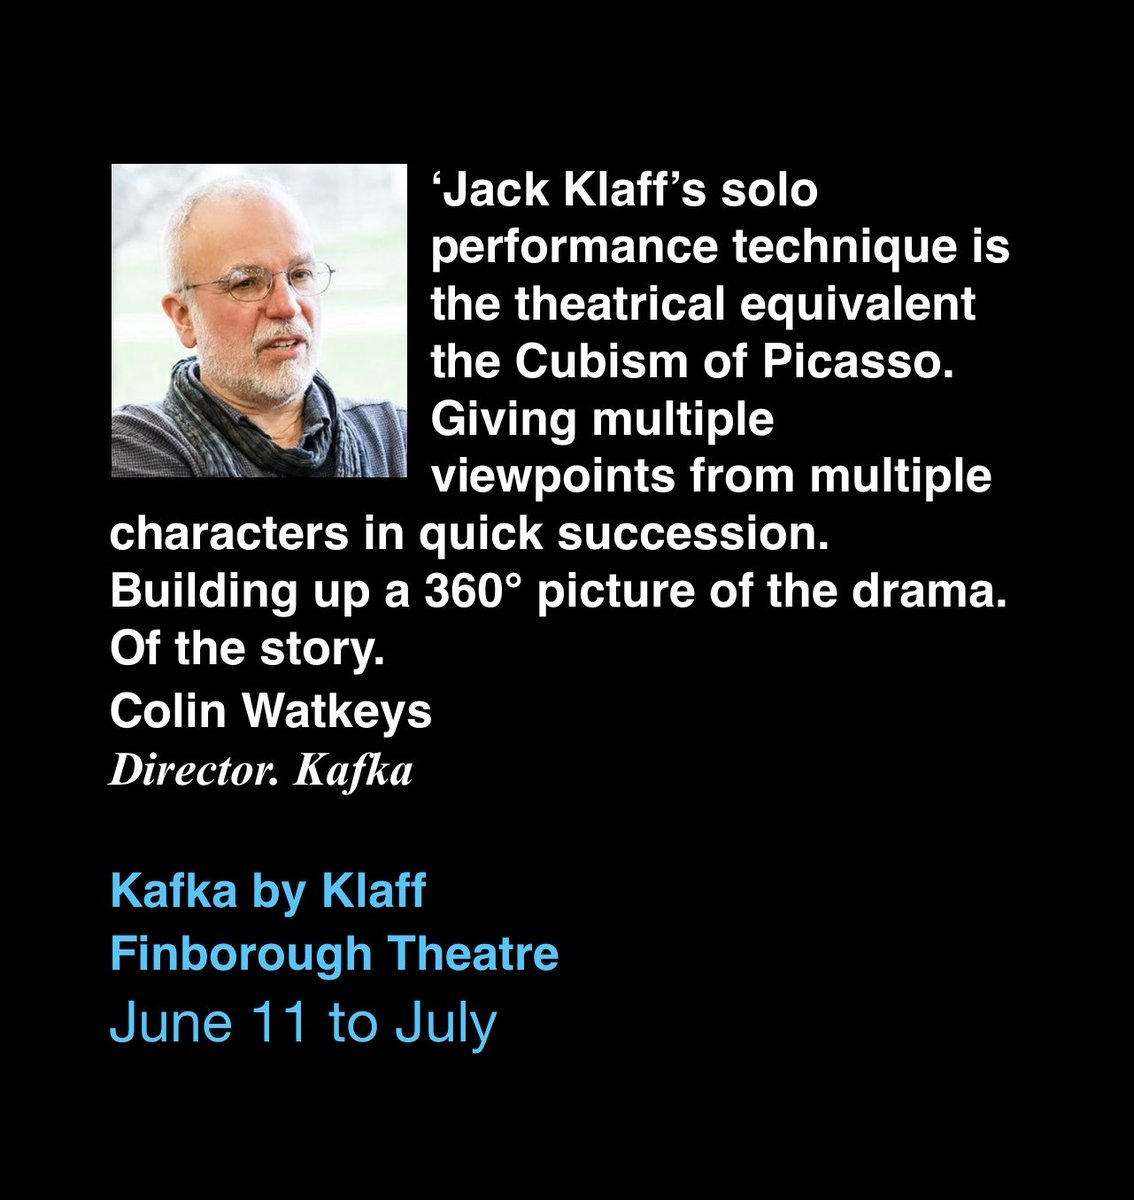 Kafka
by Jack Klaff
Finborough Theatre
11 June to 6 July 
Directed by Colin Watkeys 

Details, Info and
Booking:
finboroughtheatre.co.uk/production/Kaf…

@finborough 
#HotTicket #CubismPicasso #360Degrees
#FranzKafka 
#GlobalKafka